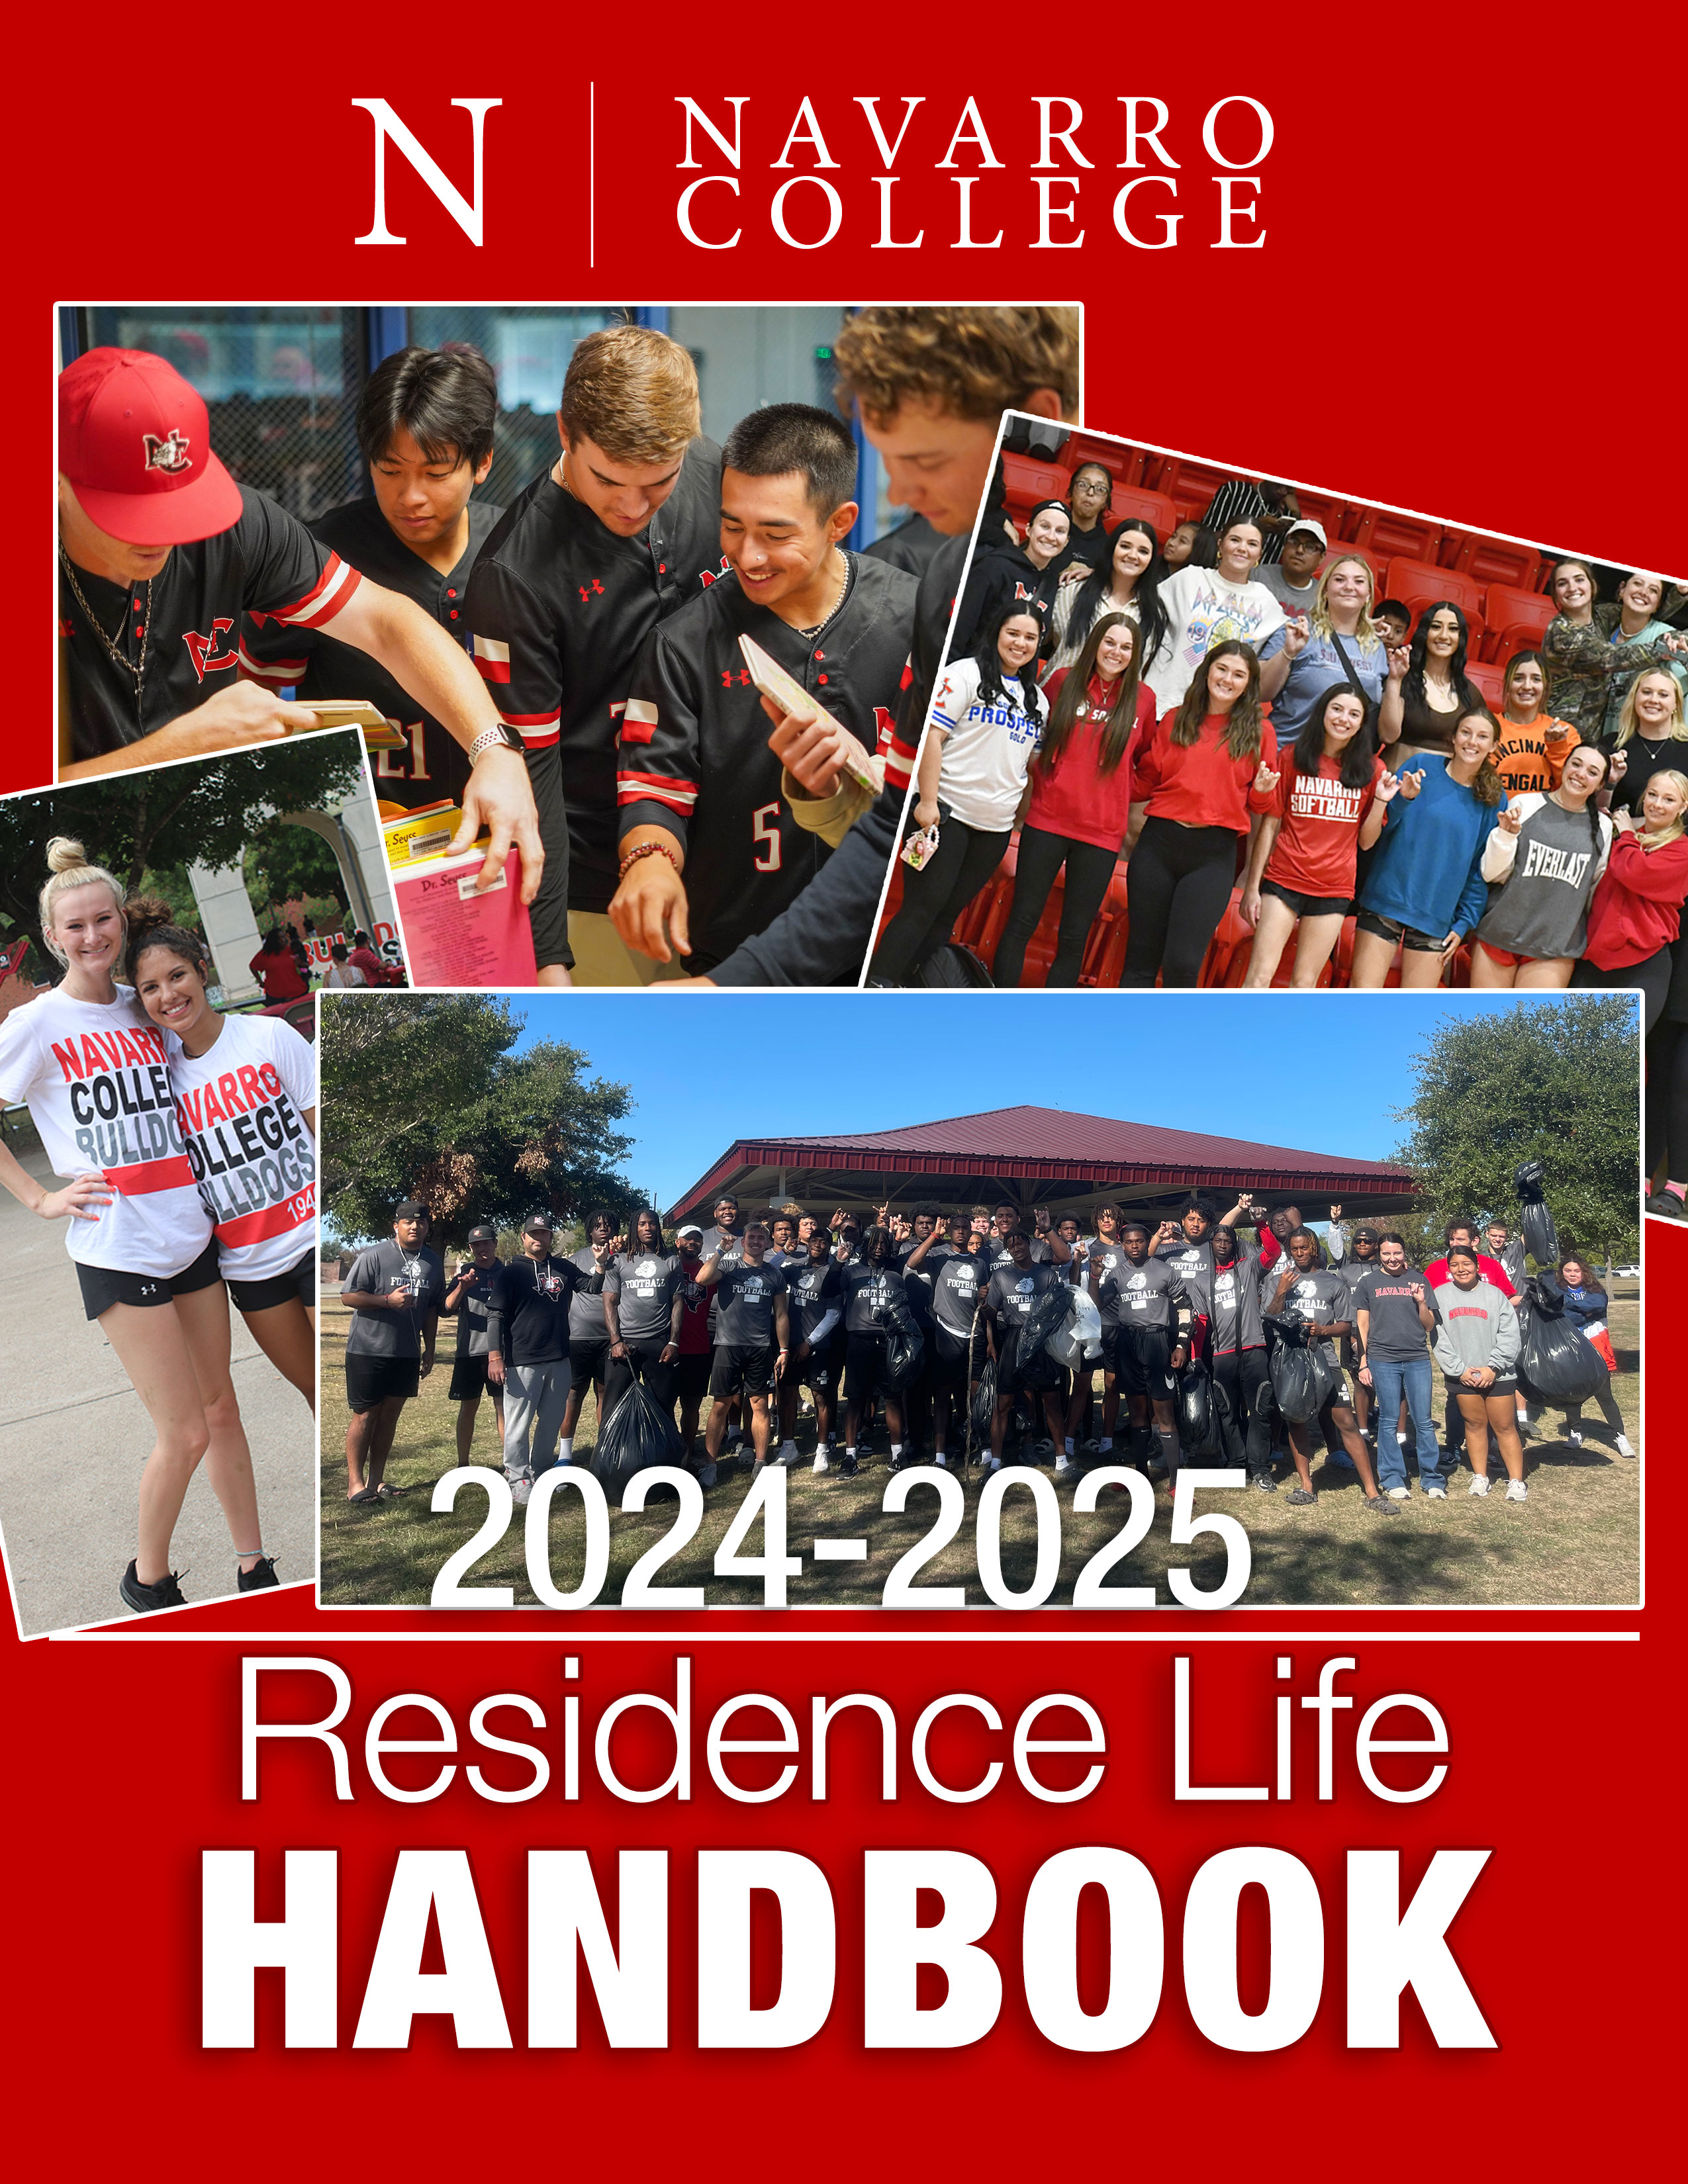 Residence Life Handbook 2024-2025